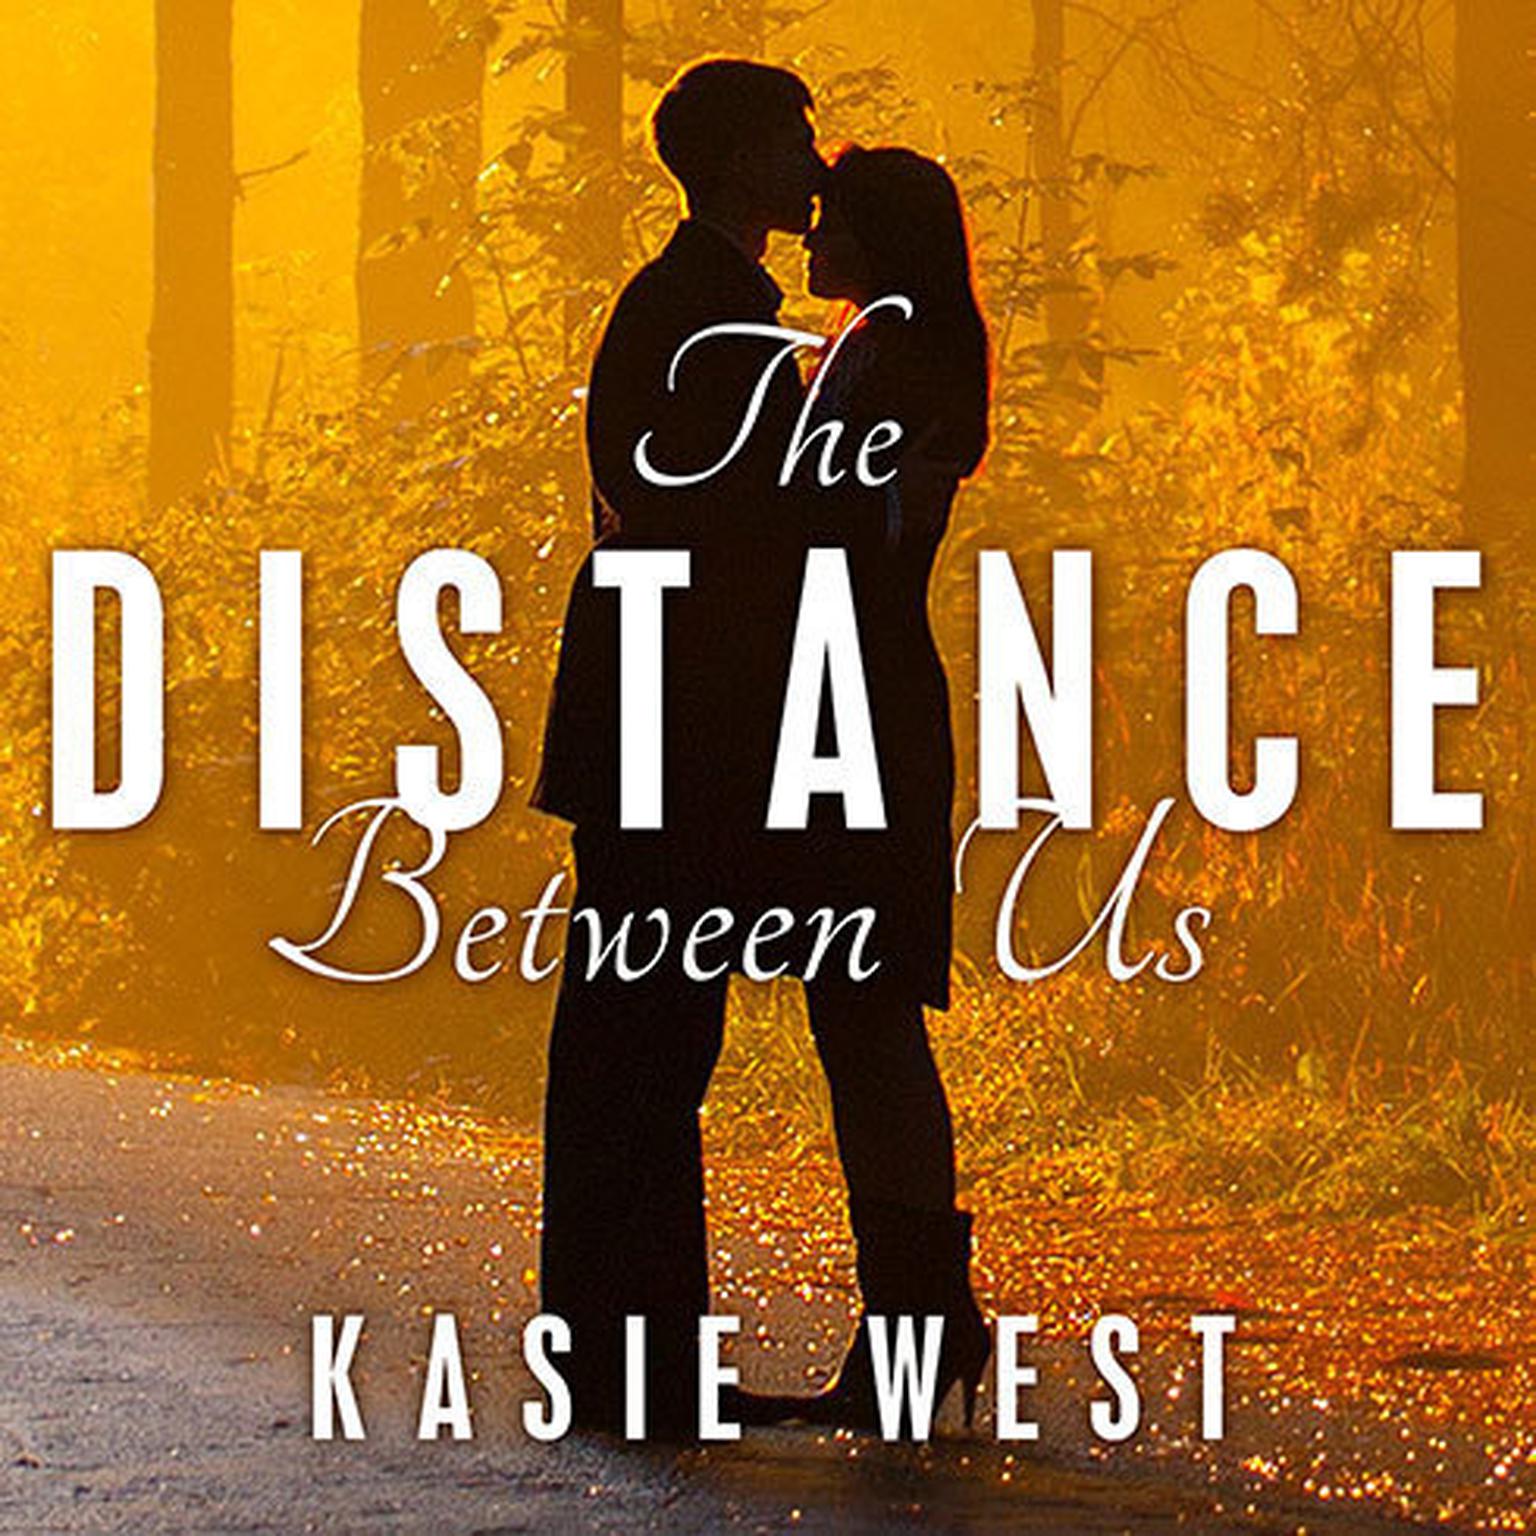 The Distance Between Us Audiobook, by Kasie West